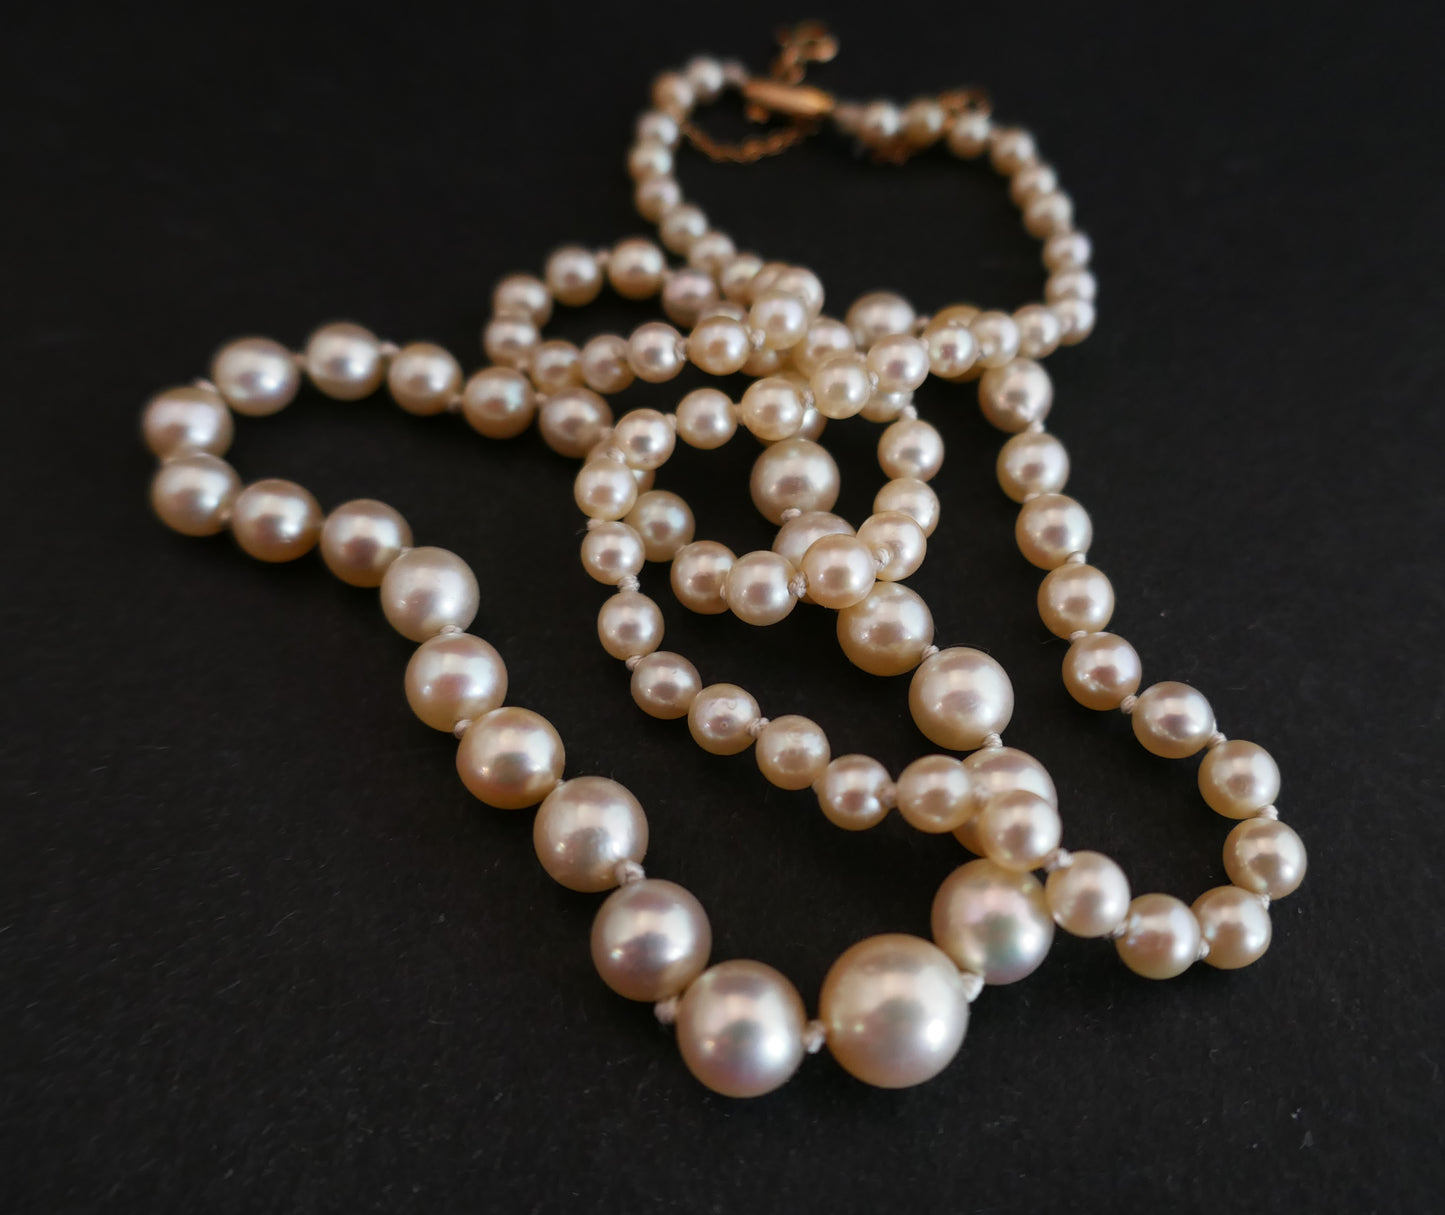 Collier De Perles De Culture, Fermoir Or 18 Carats